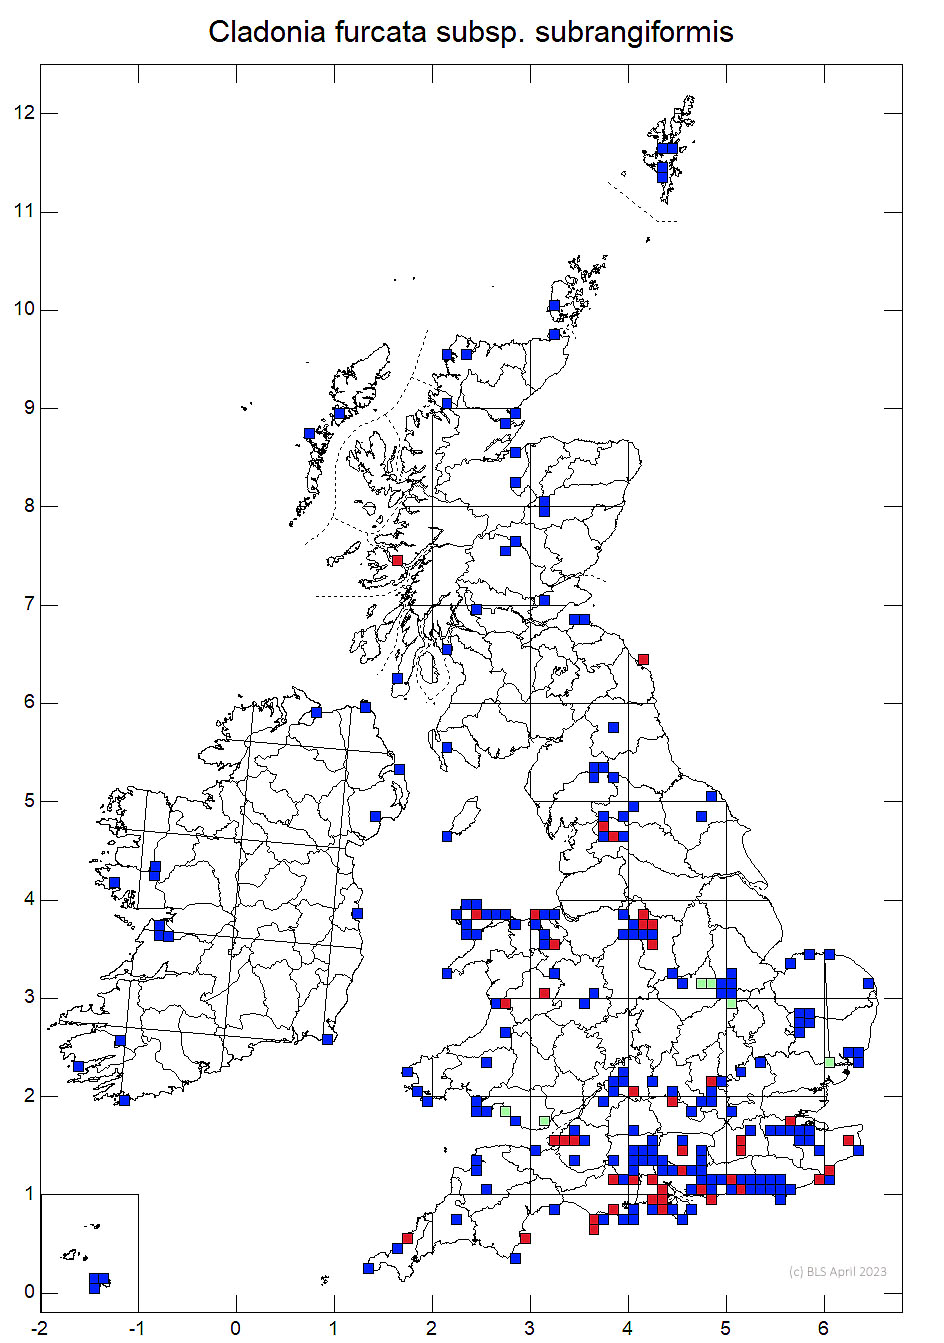 Cladonia furcata subsp. subrangiformis 1km sq distribution map